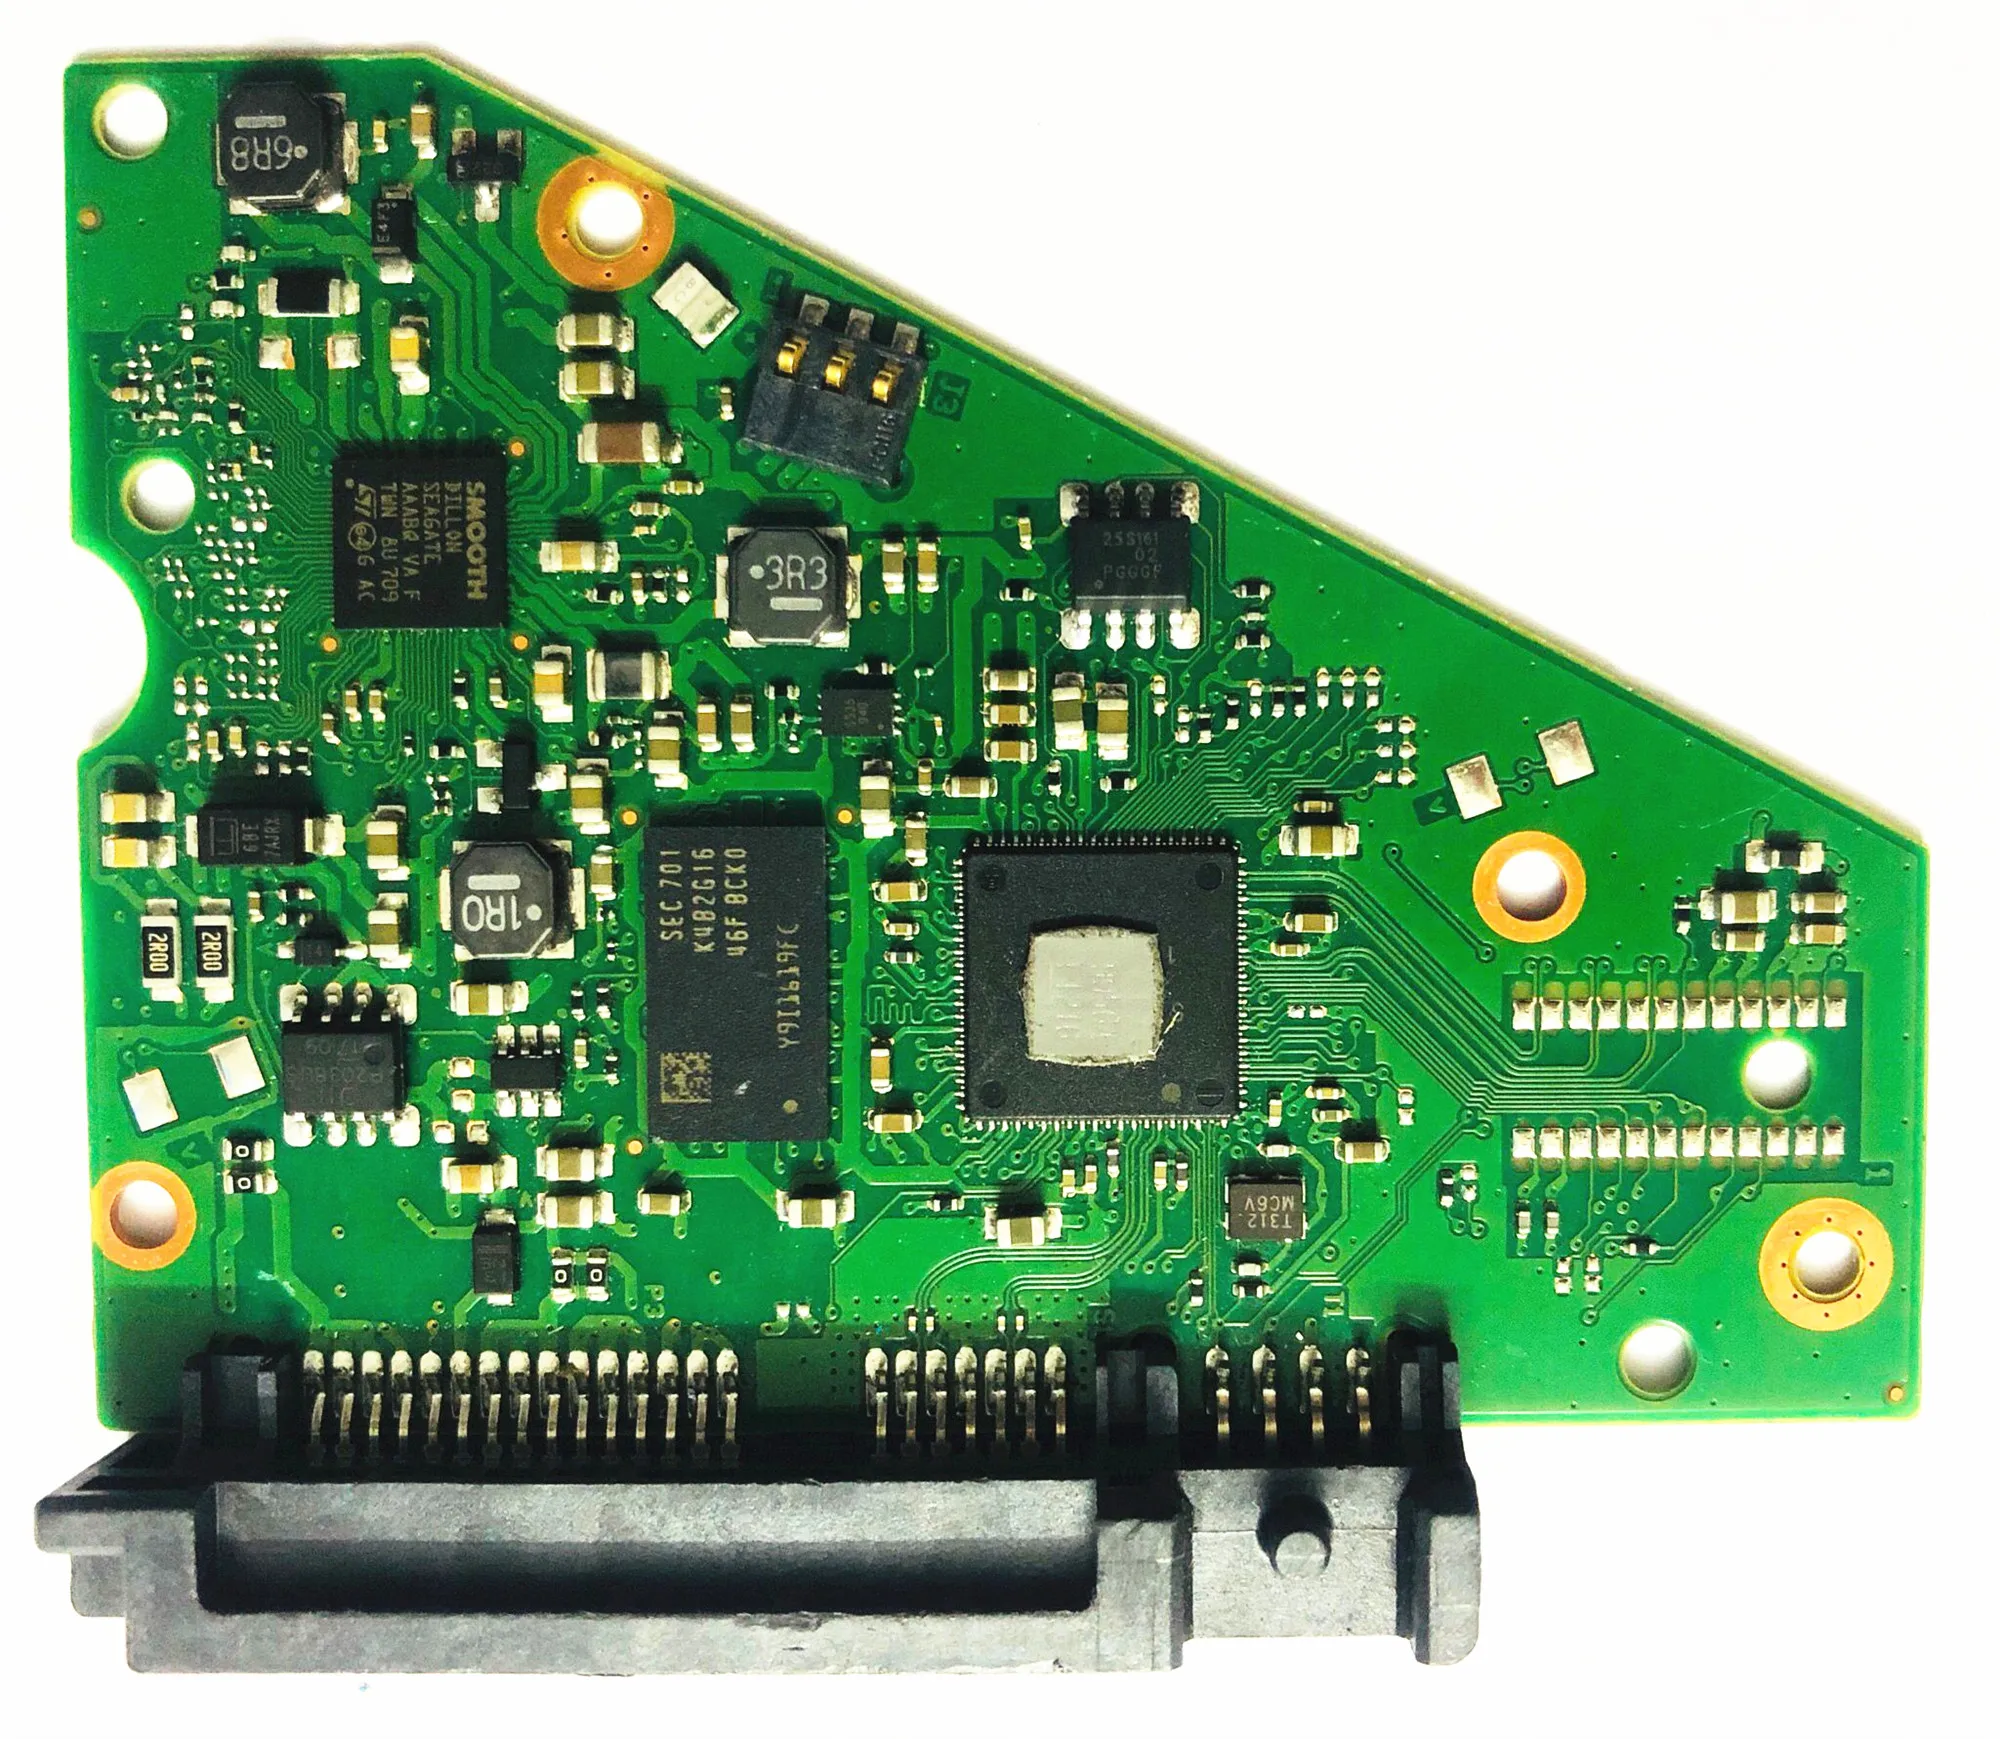 

hard drive parts PCB logic board printed circuit board 100802503 REV A / 2504 G for Seagate 3.5 SATA hdd data recovery